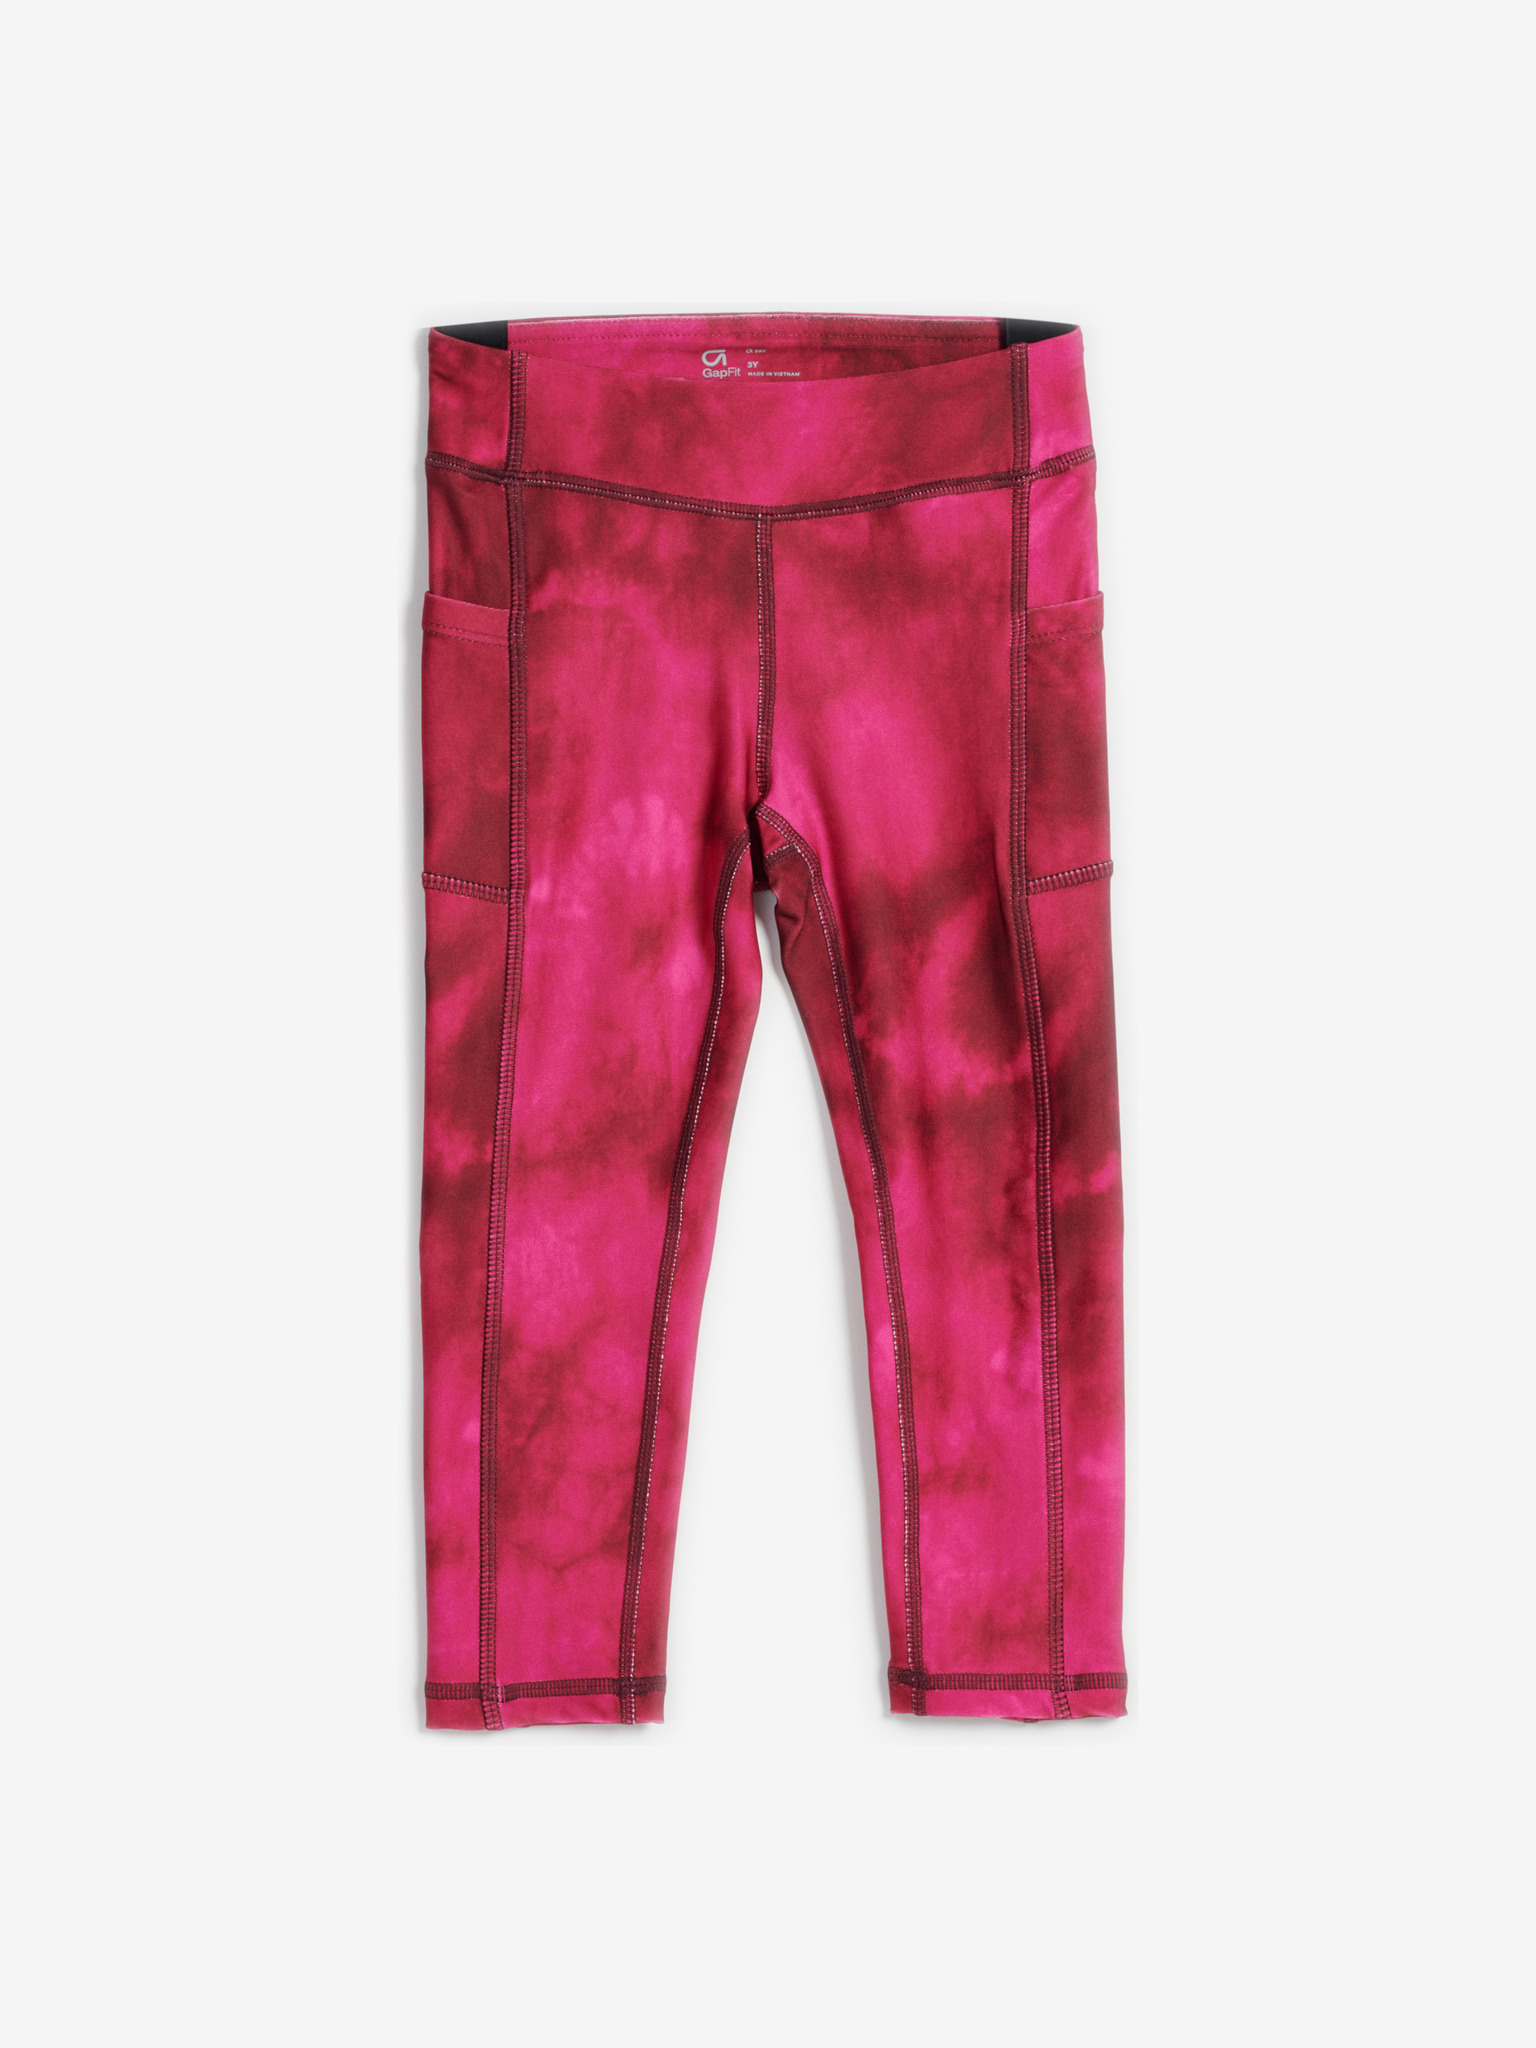 GAP Activewear Compression Pants leggings Rainbow polka gym Dot GapFit XXL  girls